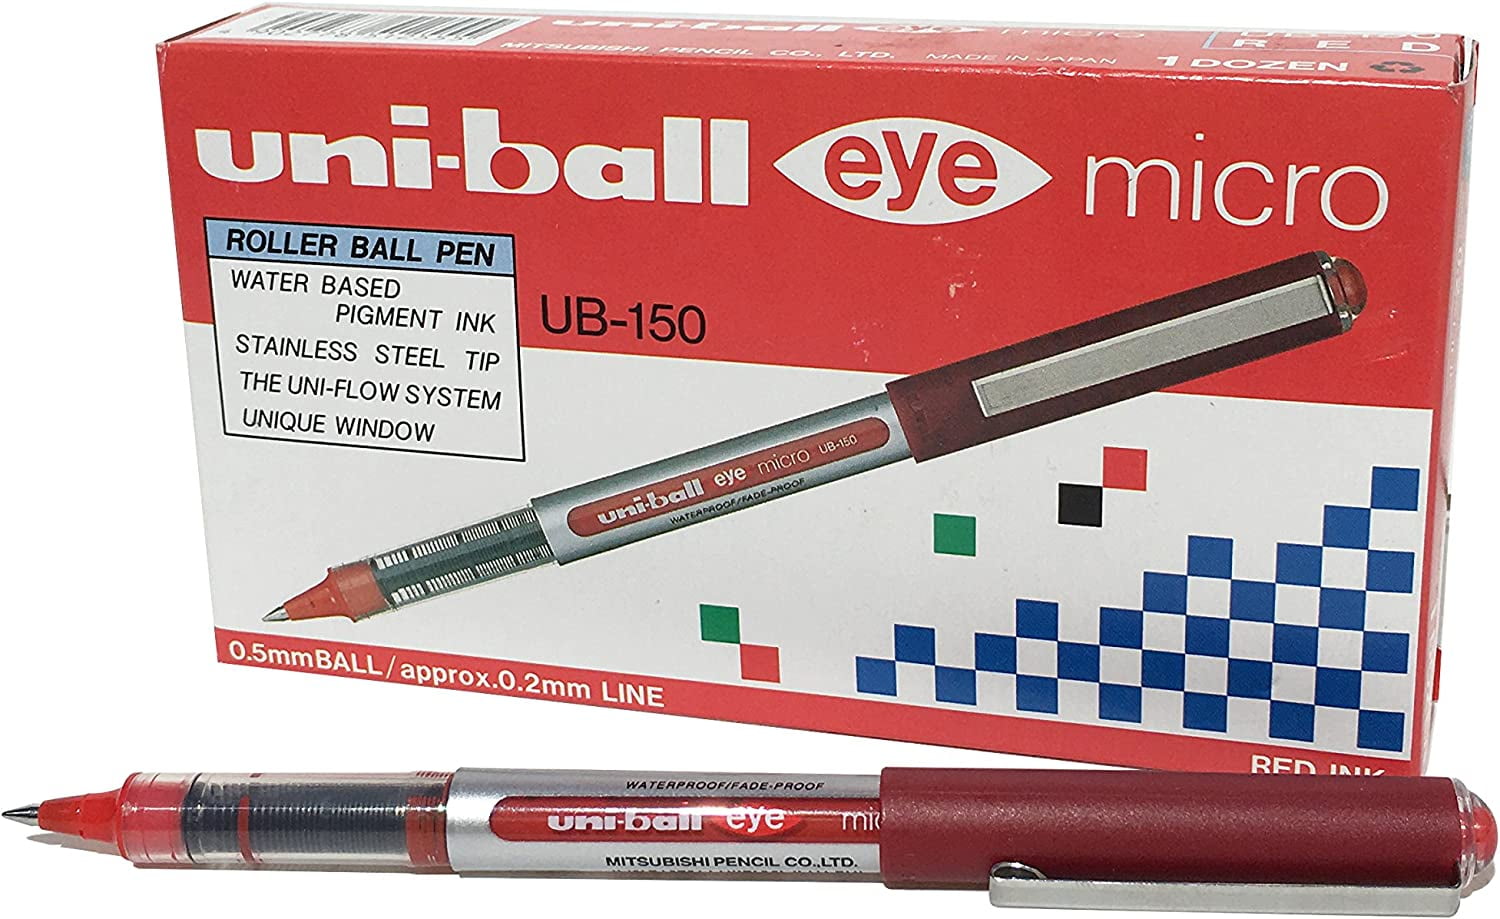 uniball™ Vision Rollerball Pen - Ultra Micro Pen Point - 0.38 mm Pen Point  Size - Red - 1 Each - Bluebird Office Supplies